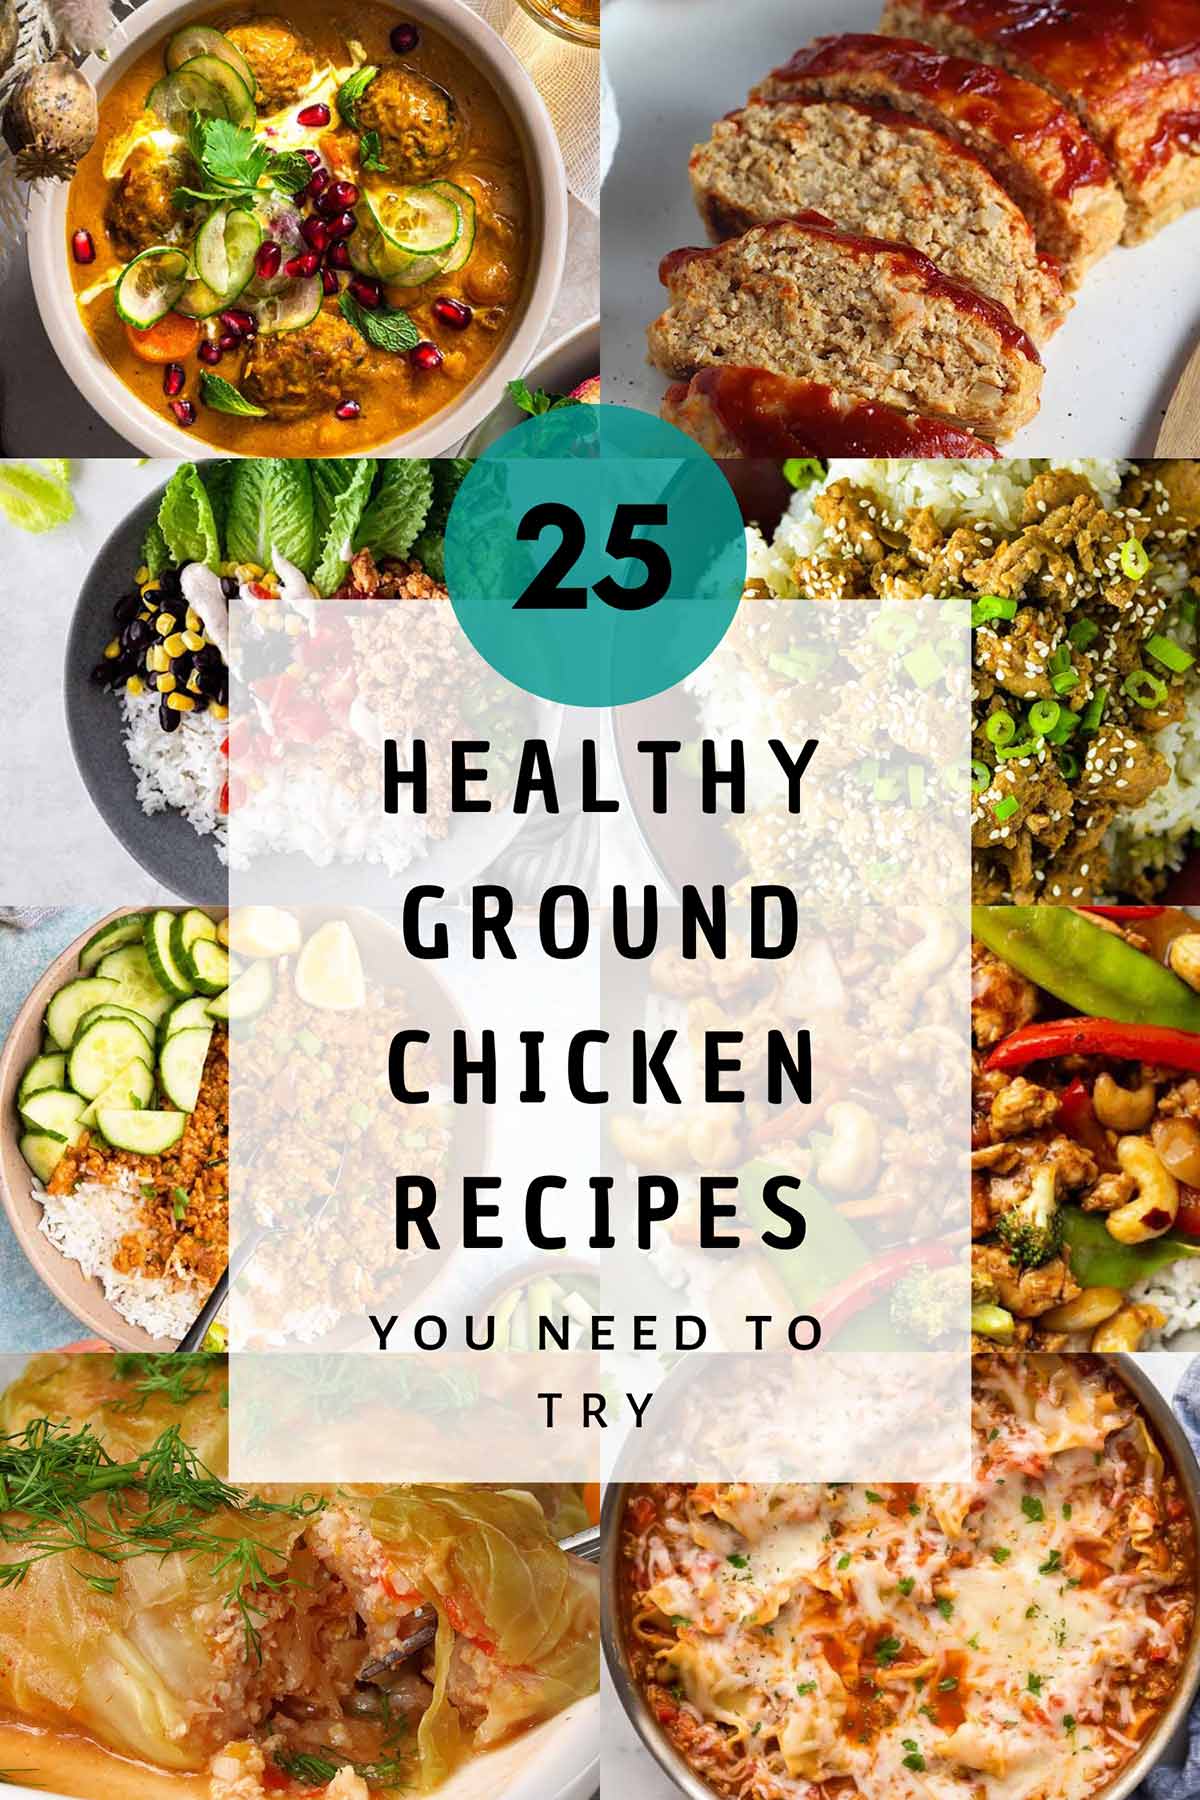 18 Healthy Ground Chicken Recipes That'll Make You Feel Great #healthy #chicken | yummyaddiction.com